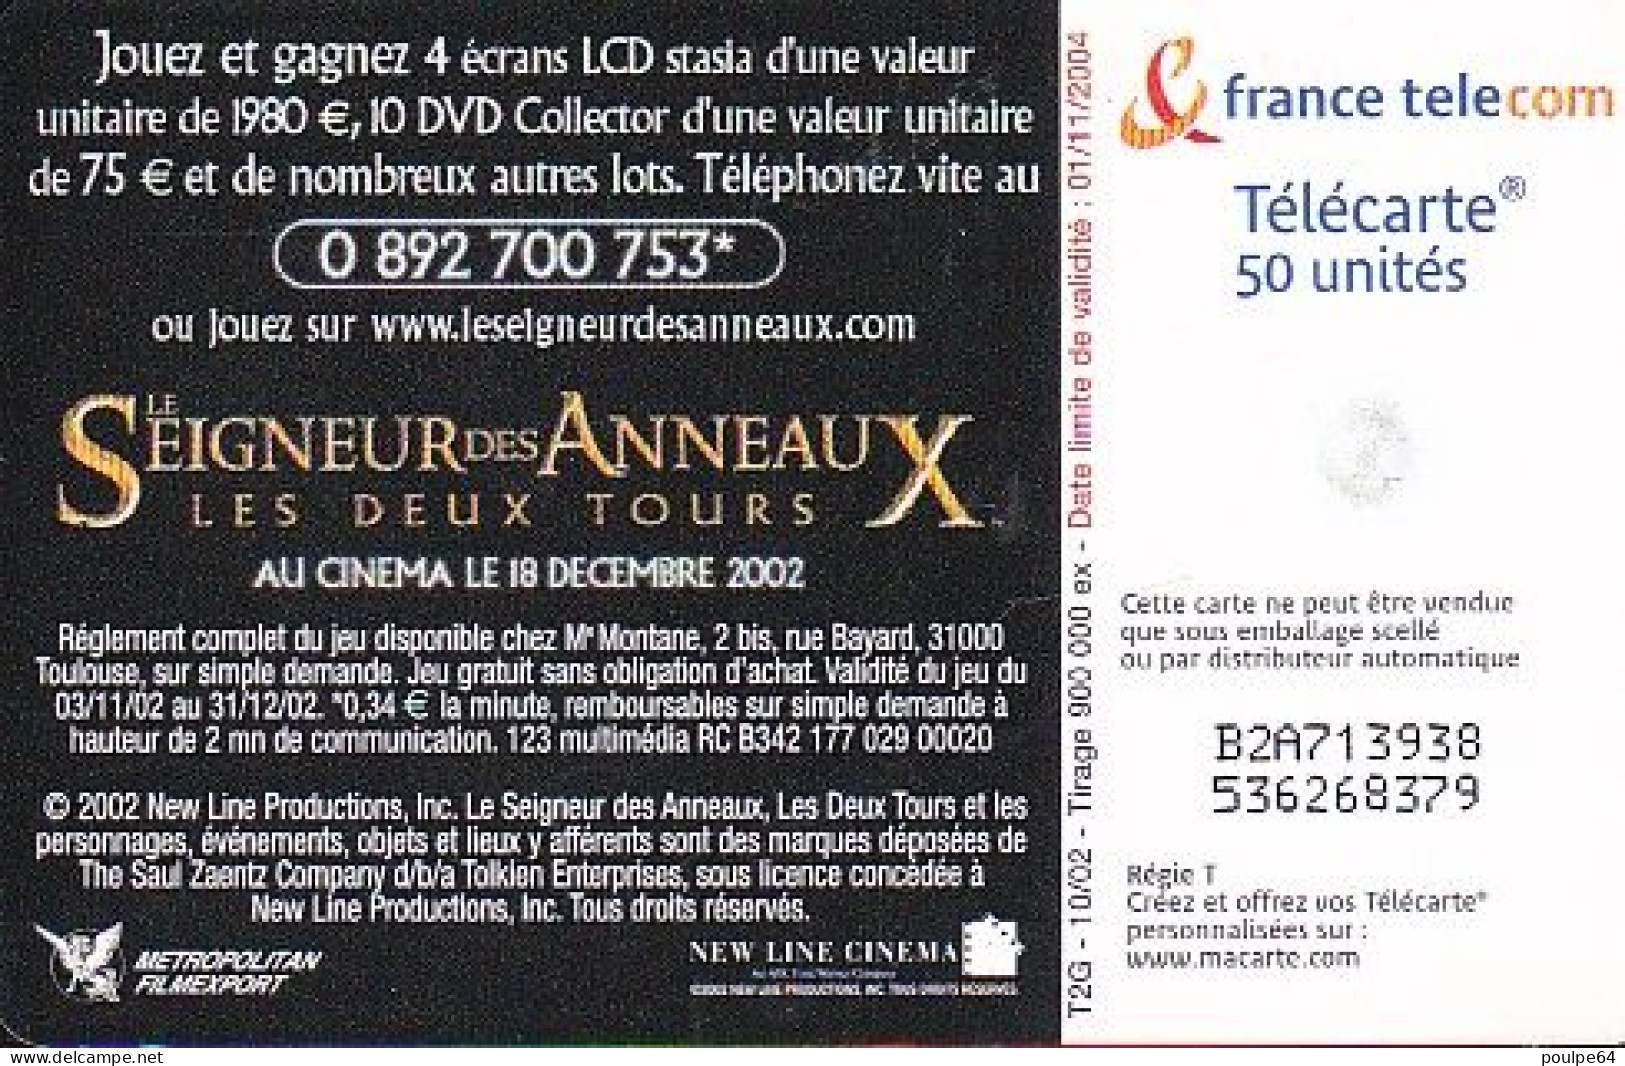 F1255  10/2002 - SEIGNEUR DES ANNEAUX " L'anneau "  - 50 GEM2 - 2002